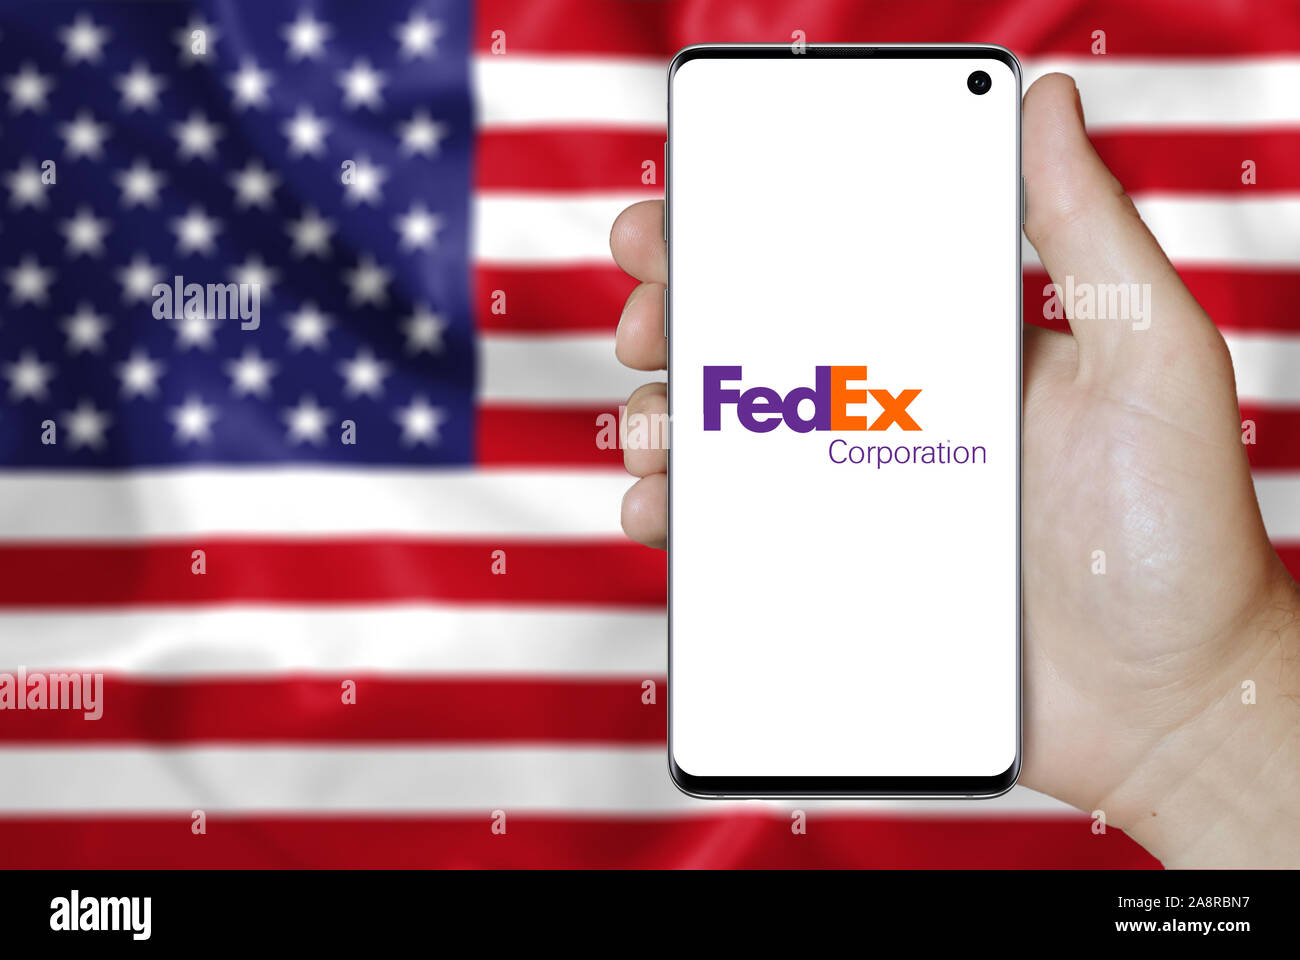 Logo of public company FedEx Corporation displayed on a smartphone. Flag of USA background. Credit: PIXDUCE Stock Photo